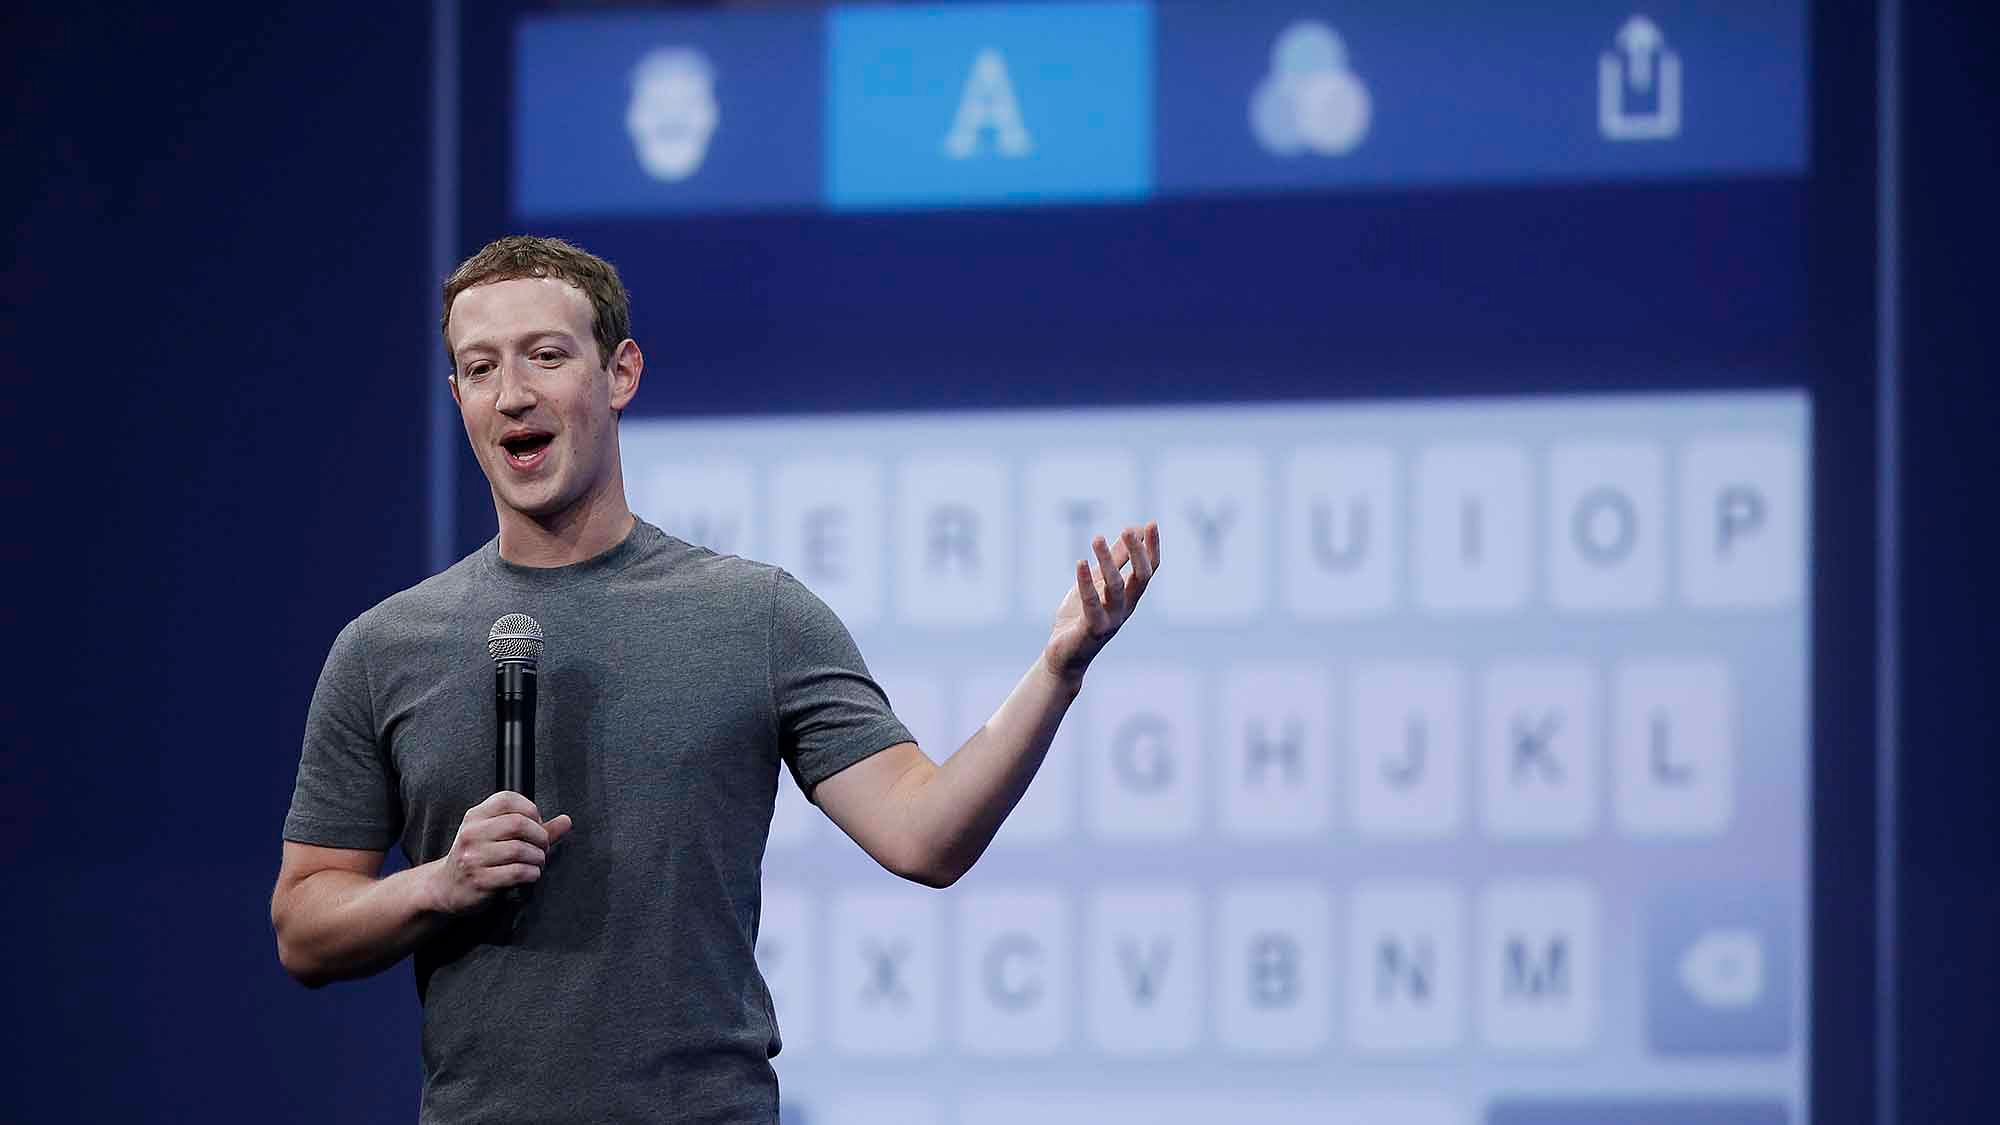 File photo of Mark Zuckerberg, CEO of Facebook